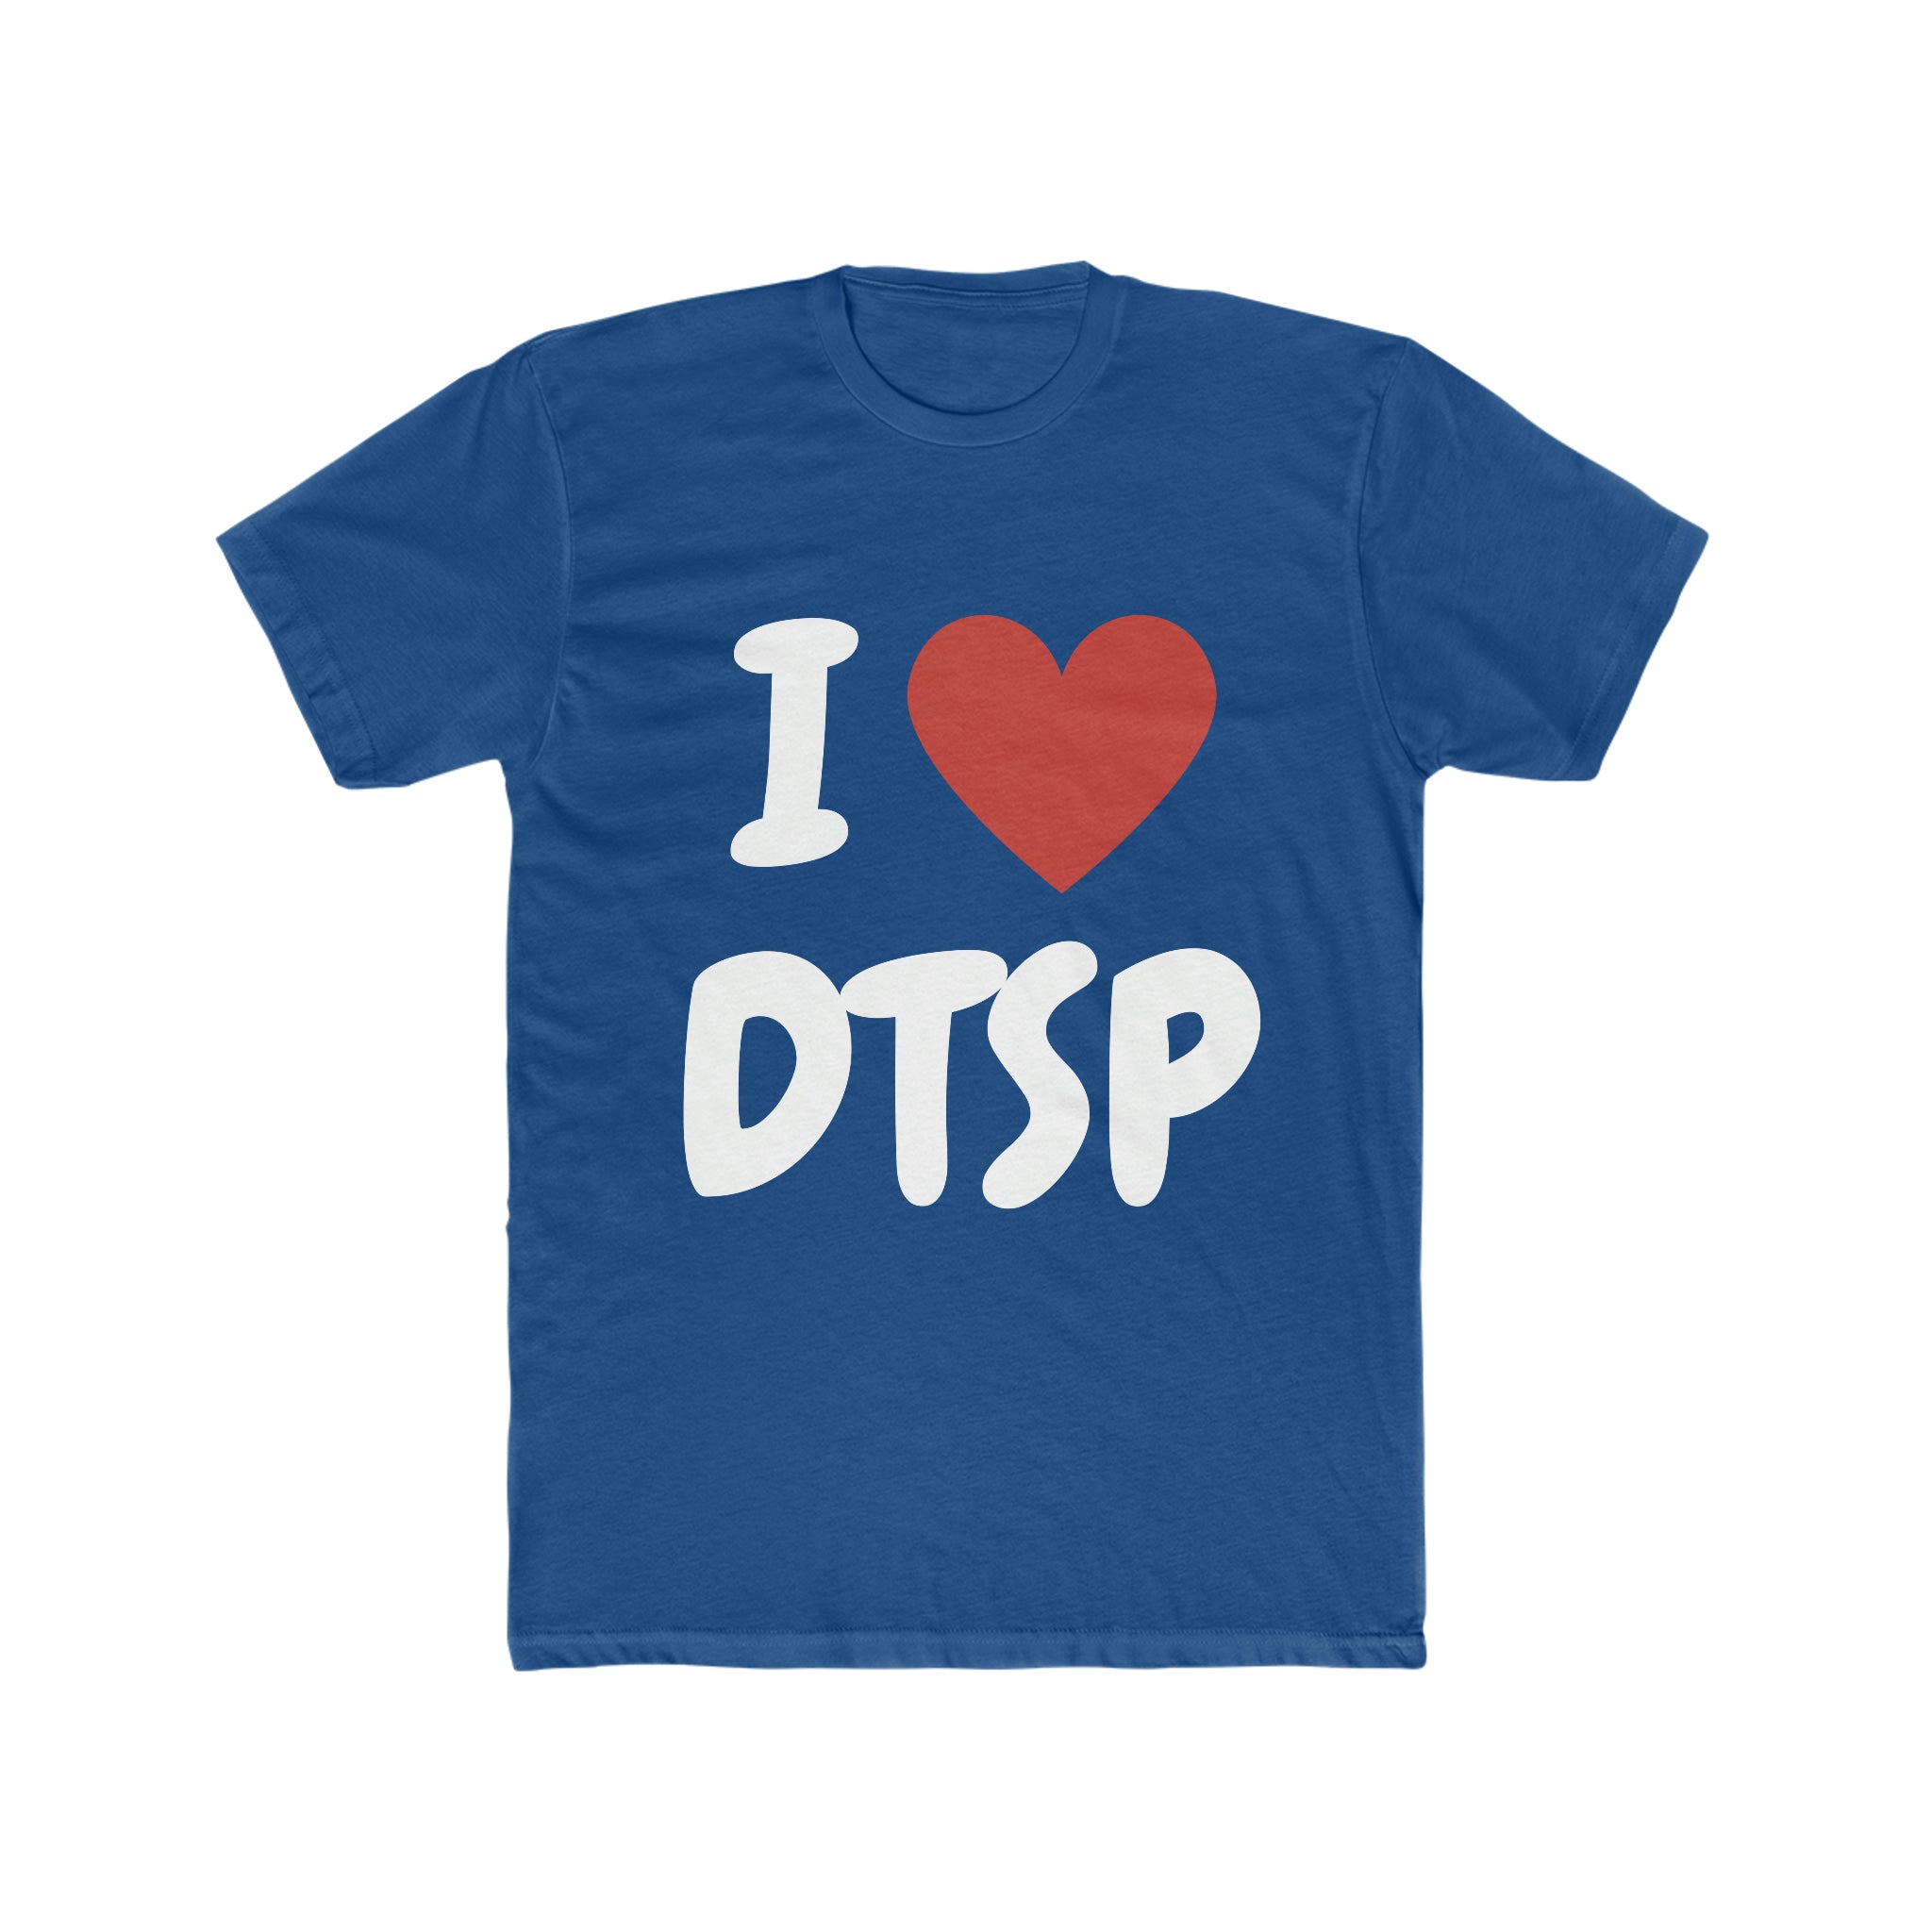 "DTSP" Tee